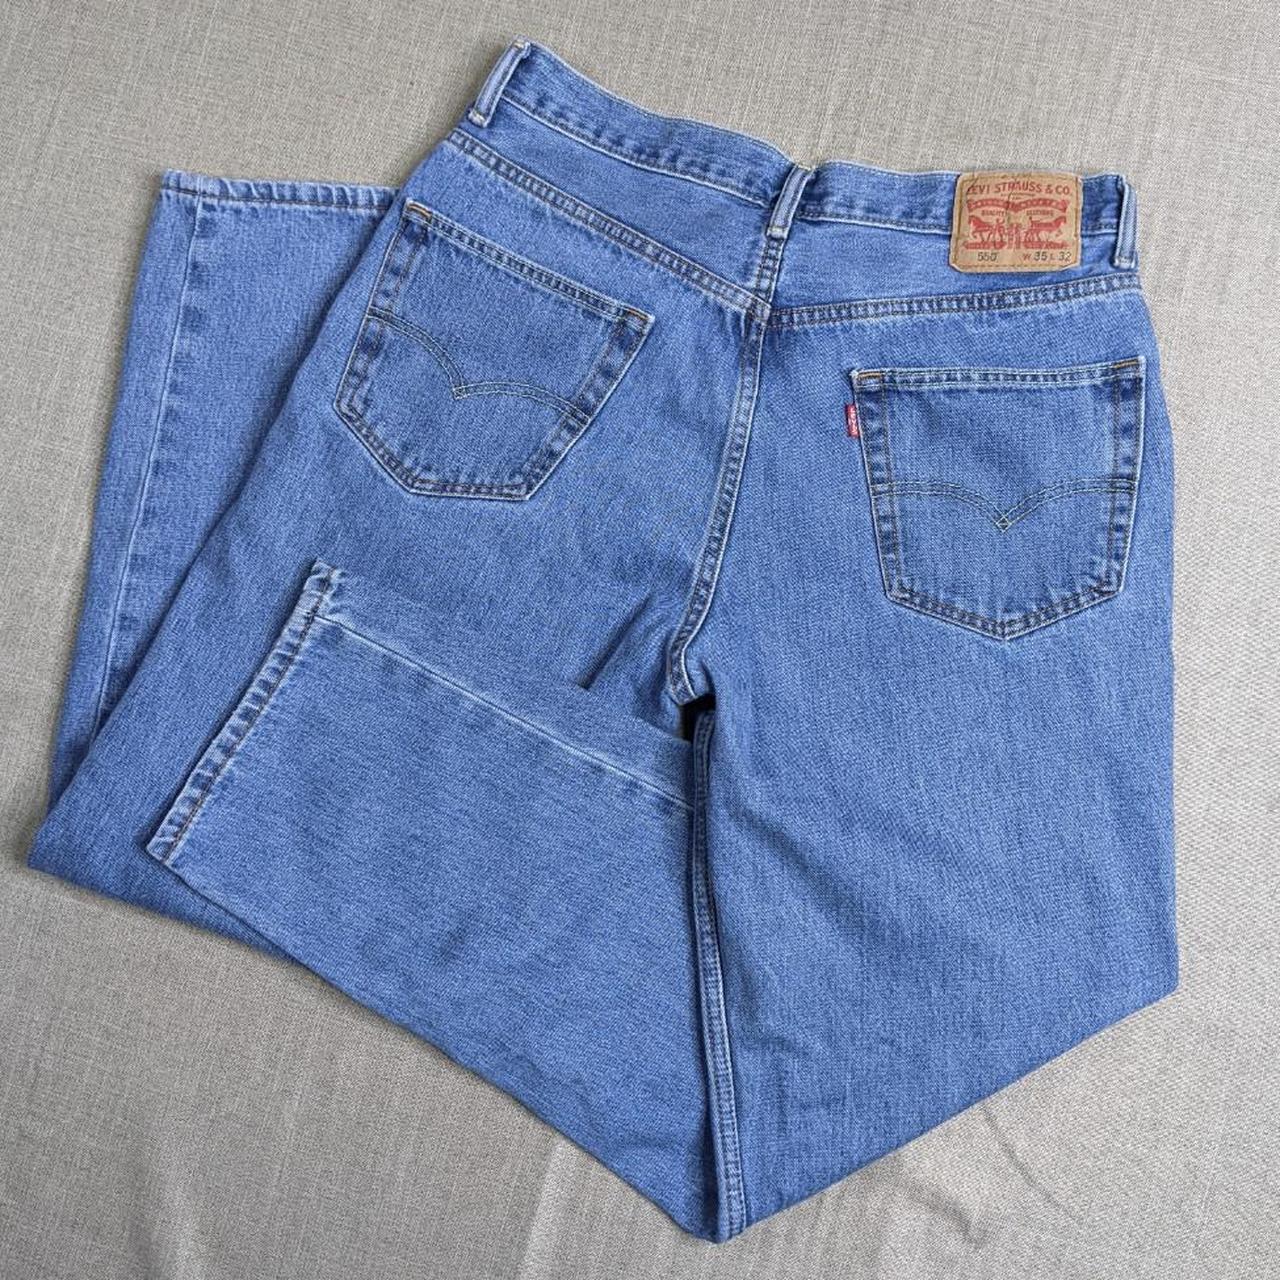 Product Image 1 - Vintage Levi's 550 dad jeans.